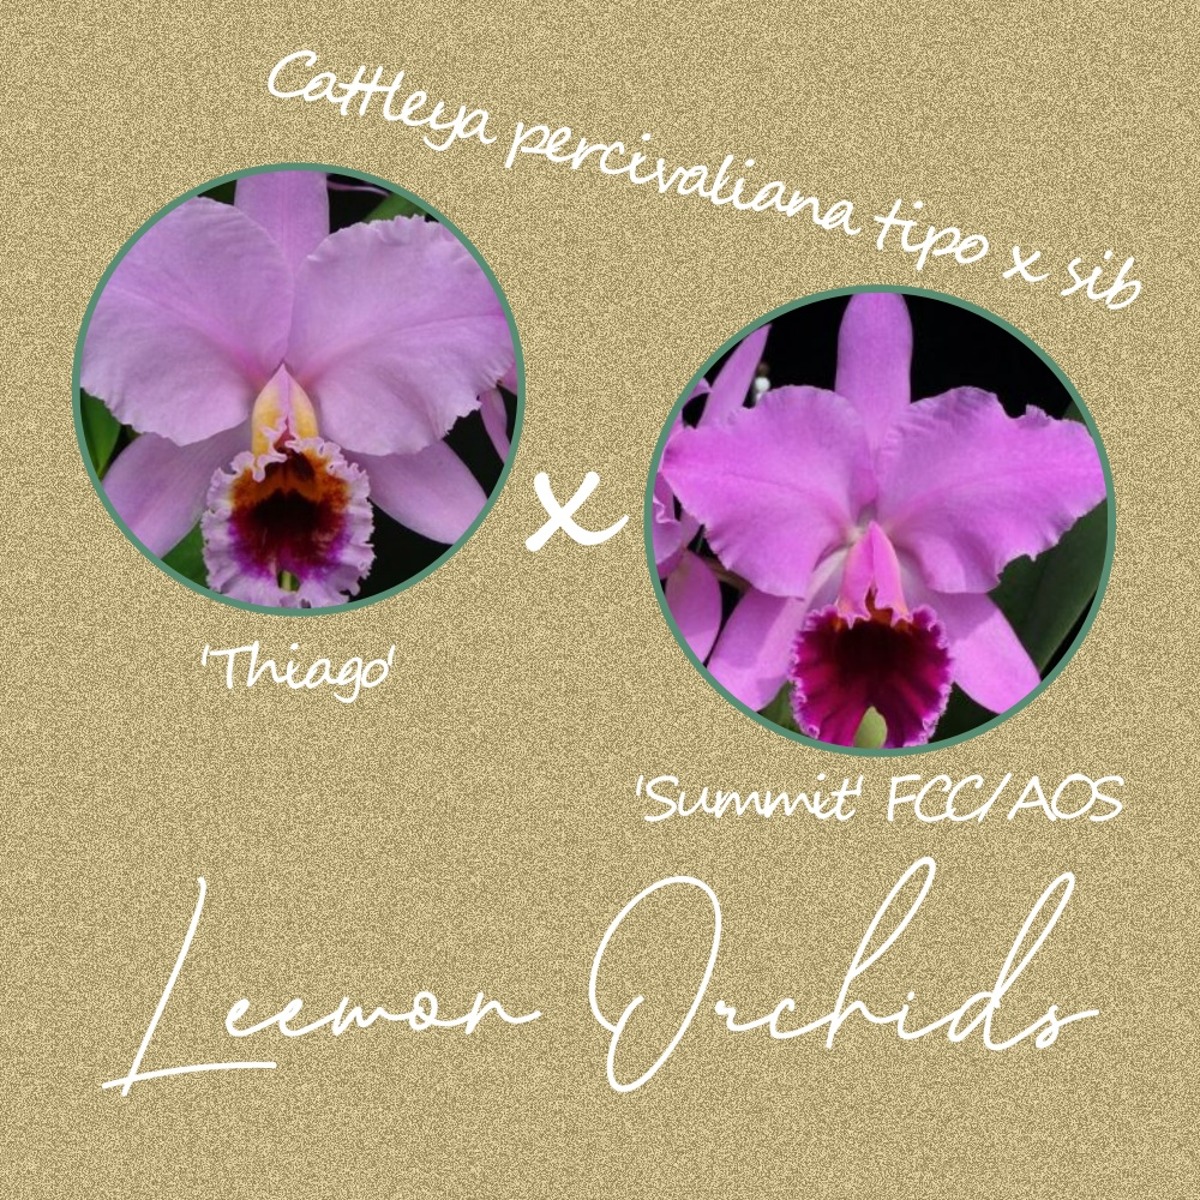 [C1690] Cattleya percivaliana tipo x sib (&#039;Thiago&#039; x &#039;Summit&#039; FCC/AOS) (중묘/ 온라인 한정재고: 3)